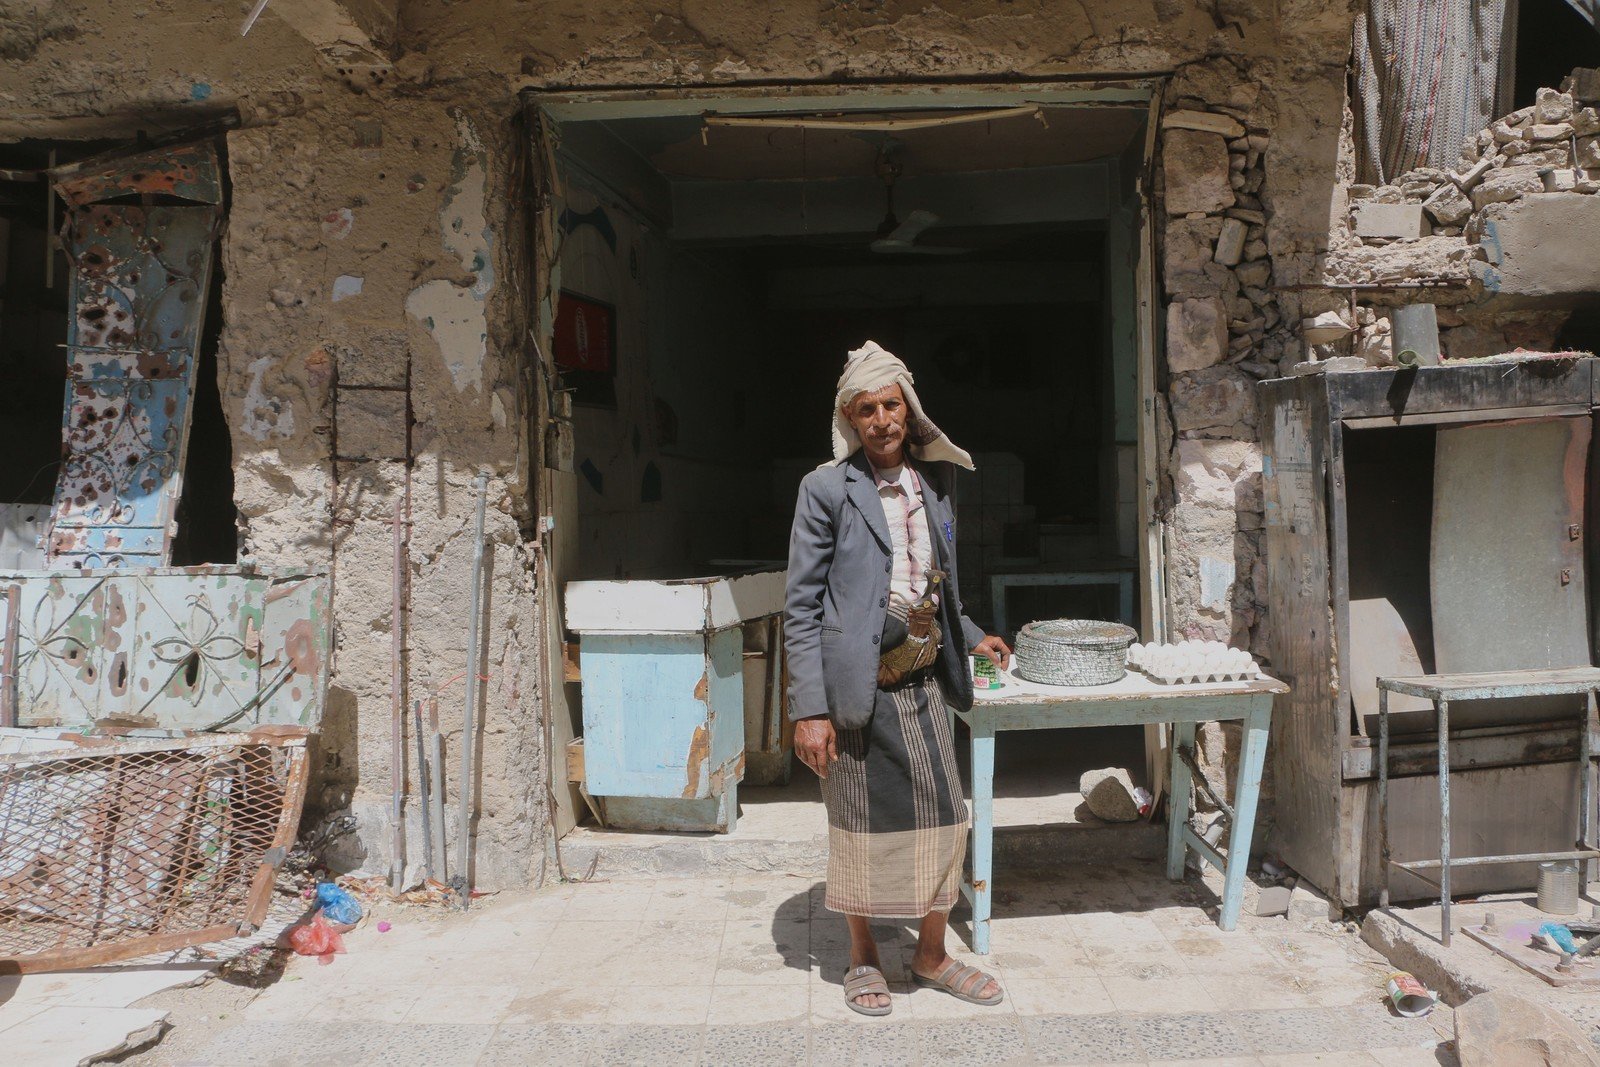 Ahmed Al-Haj 在塔伊茲地區 (Taiz) 經營快餐店。爆發激烈衝突期間，他只好暫停營業，但他已決定重開快餐店賺取生計。市面上的小商戶告訴我們，假如情況仍無改善，他們迫不得已會關門，逃命到更安全的地區。